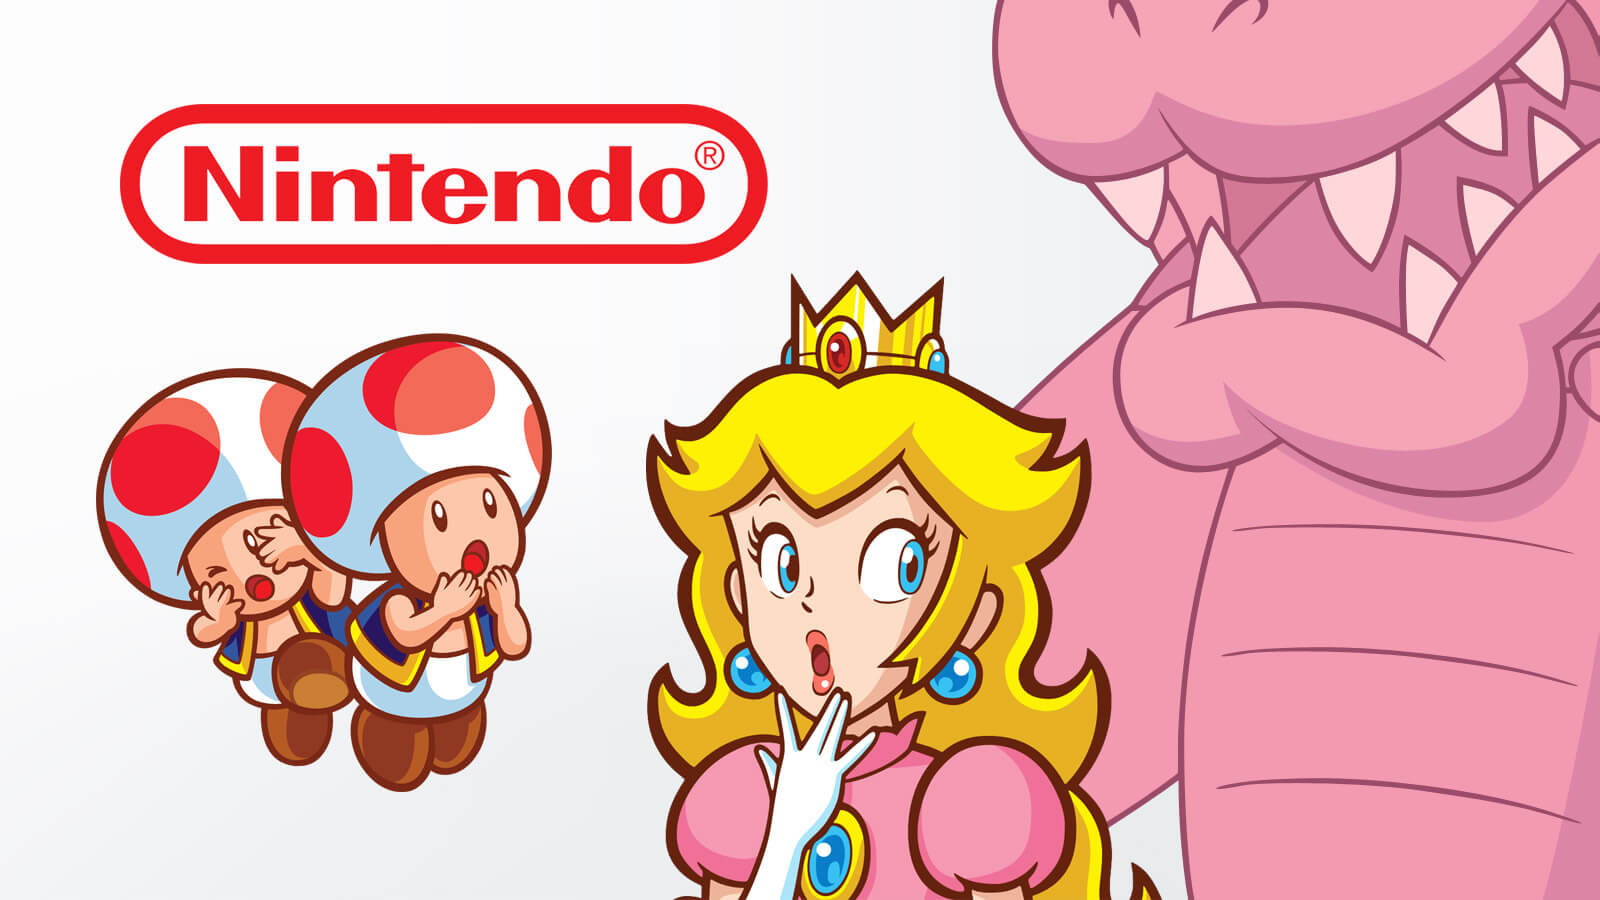 Nintendo Shuts Down Princess Peach Adult Game With Copyright Claim